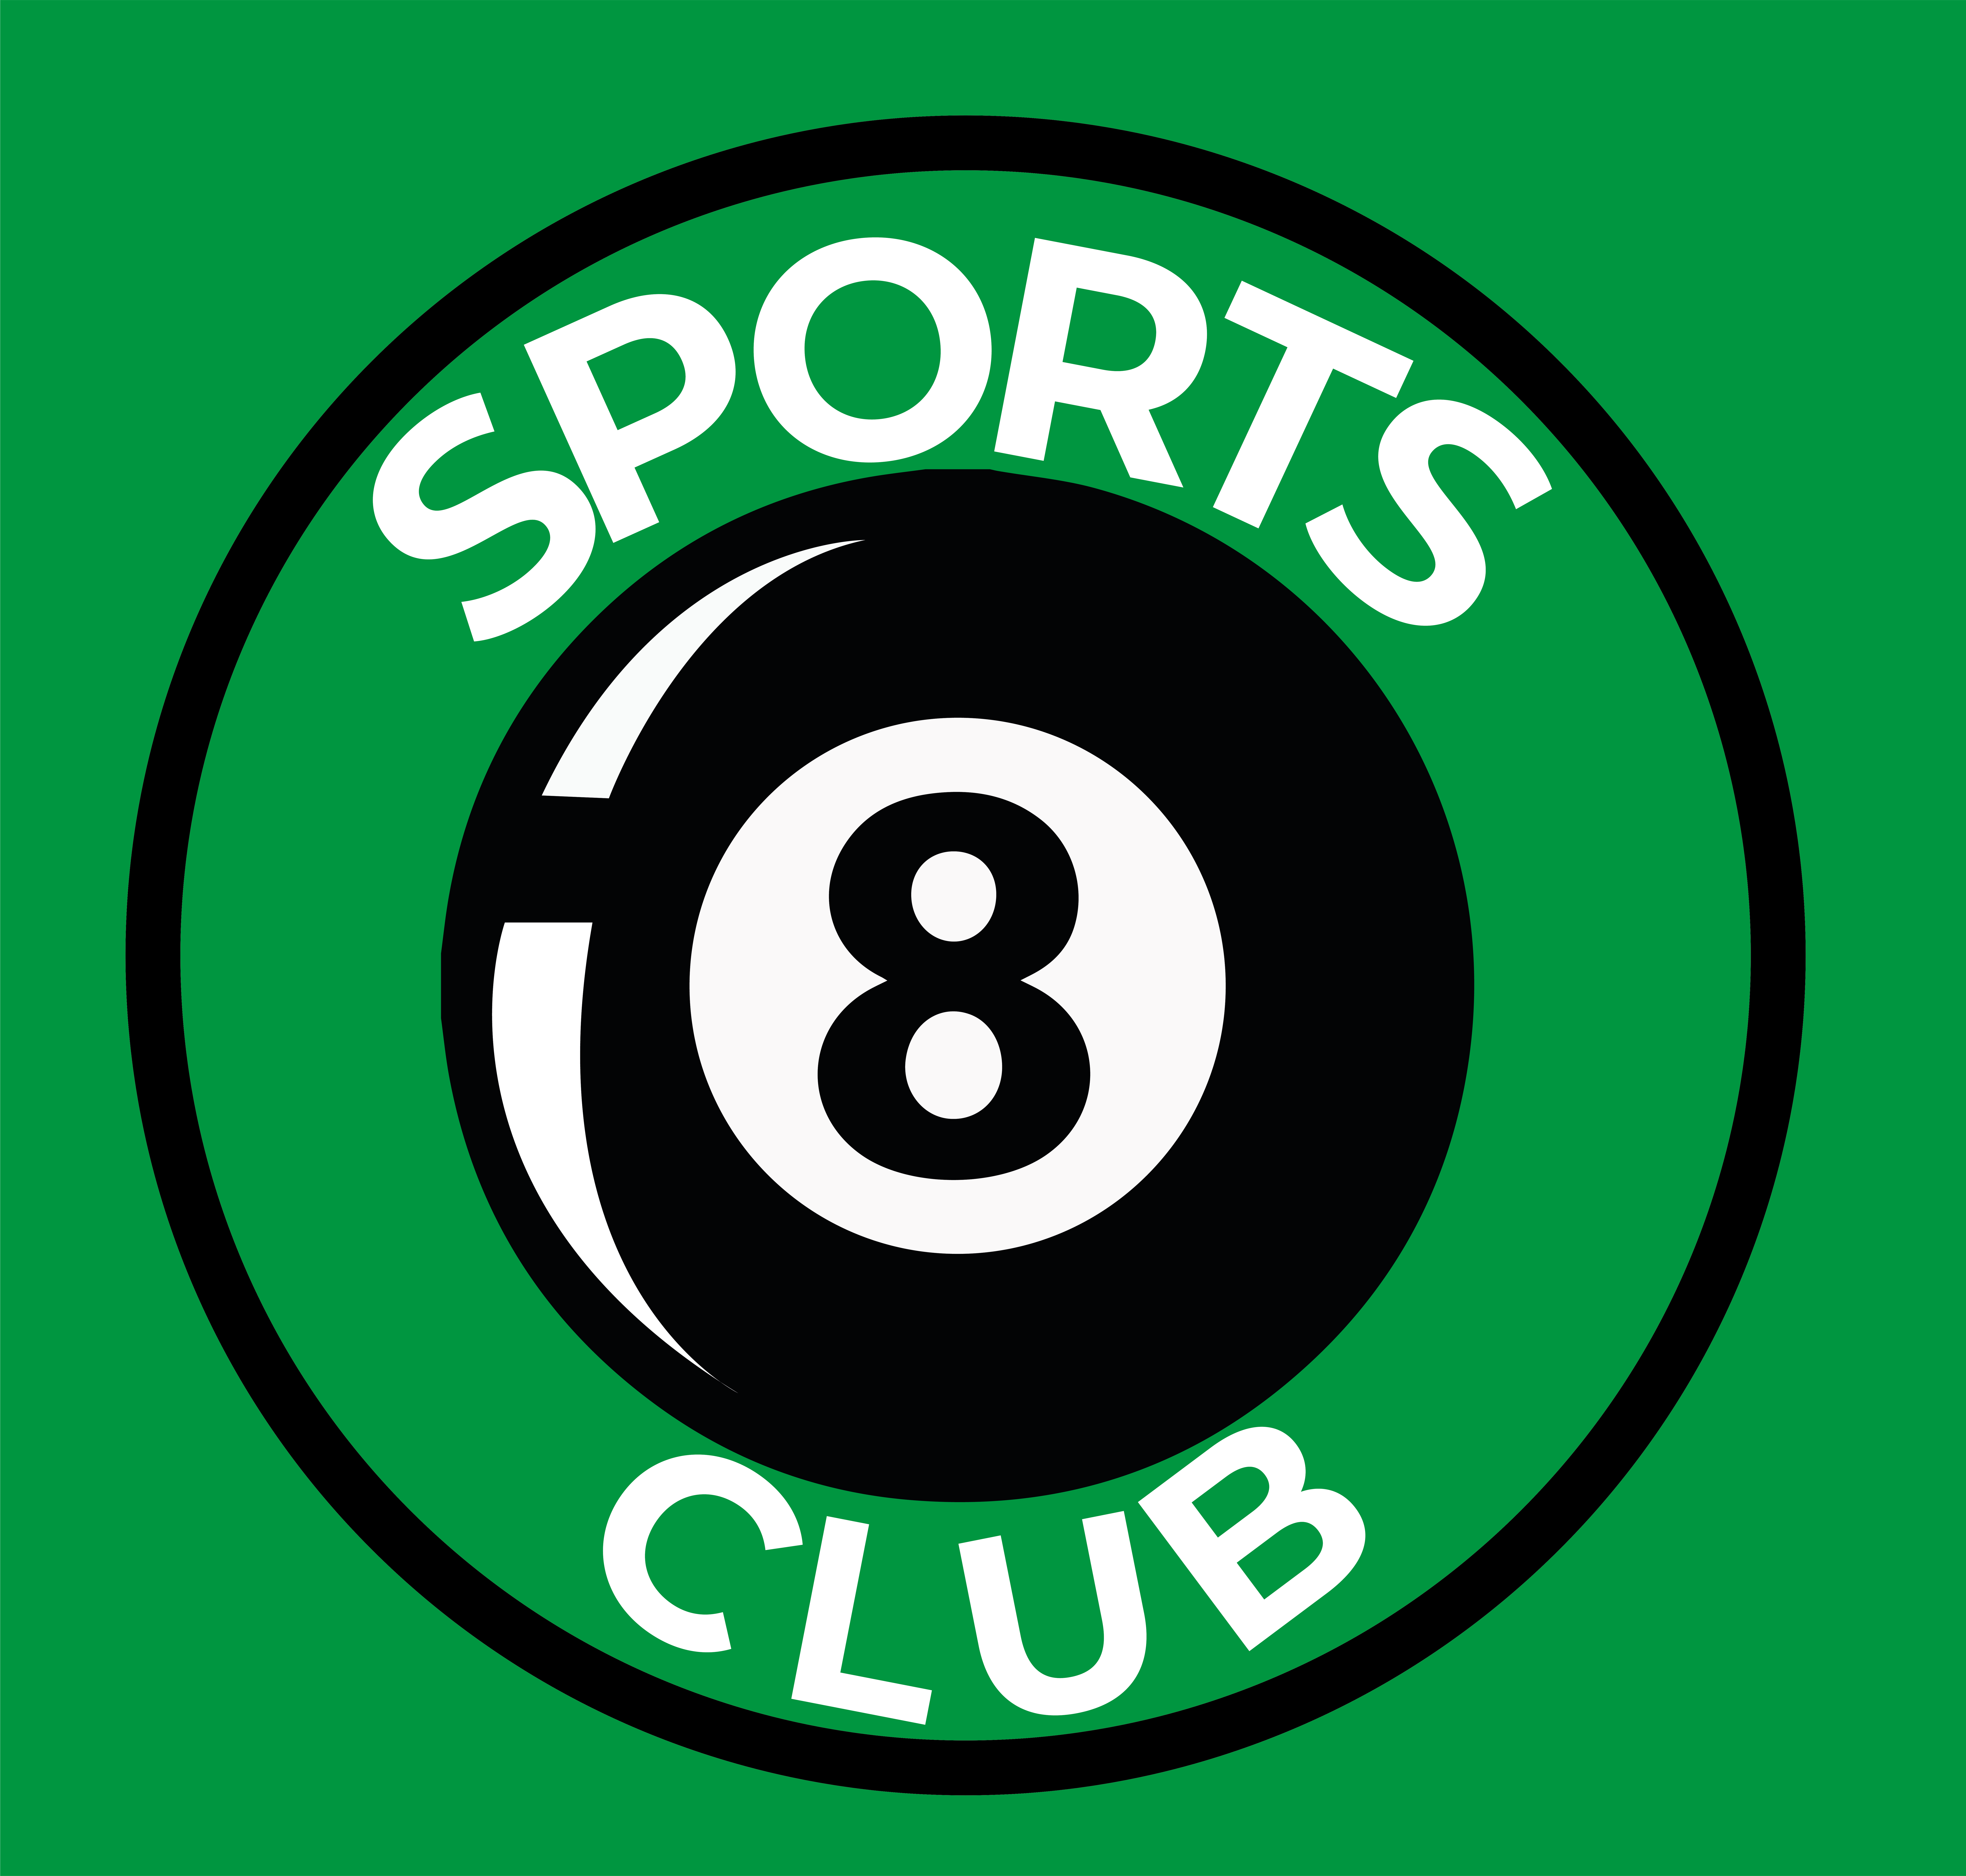 (c) Sportsclub8.com